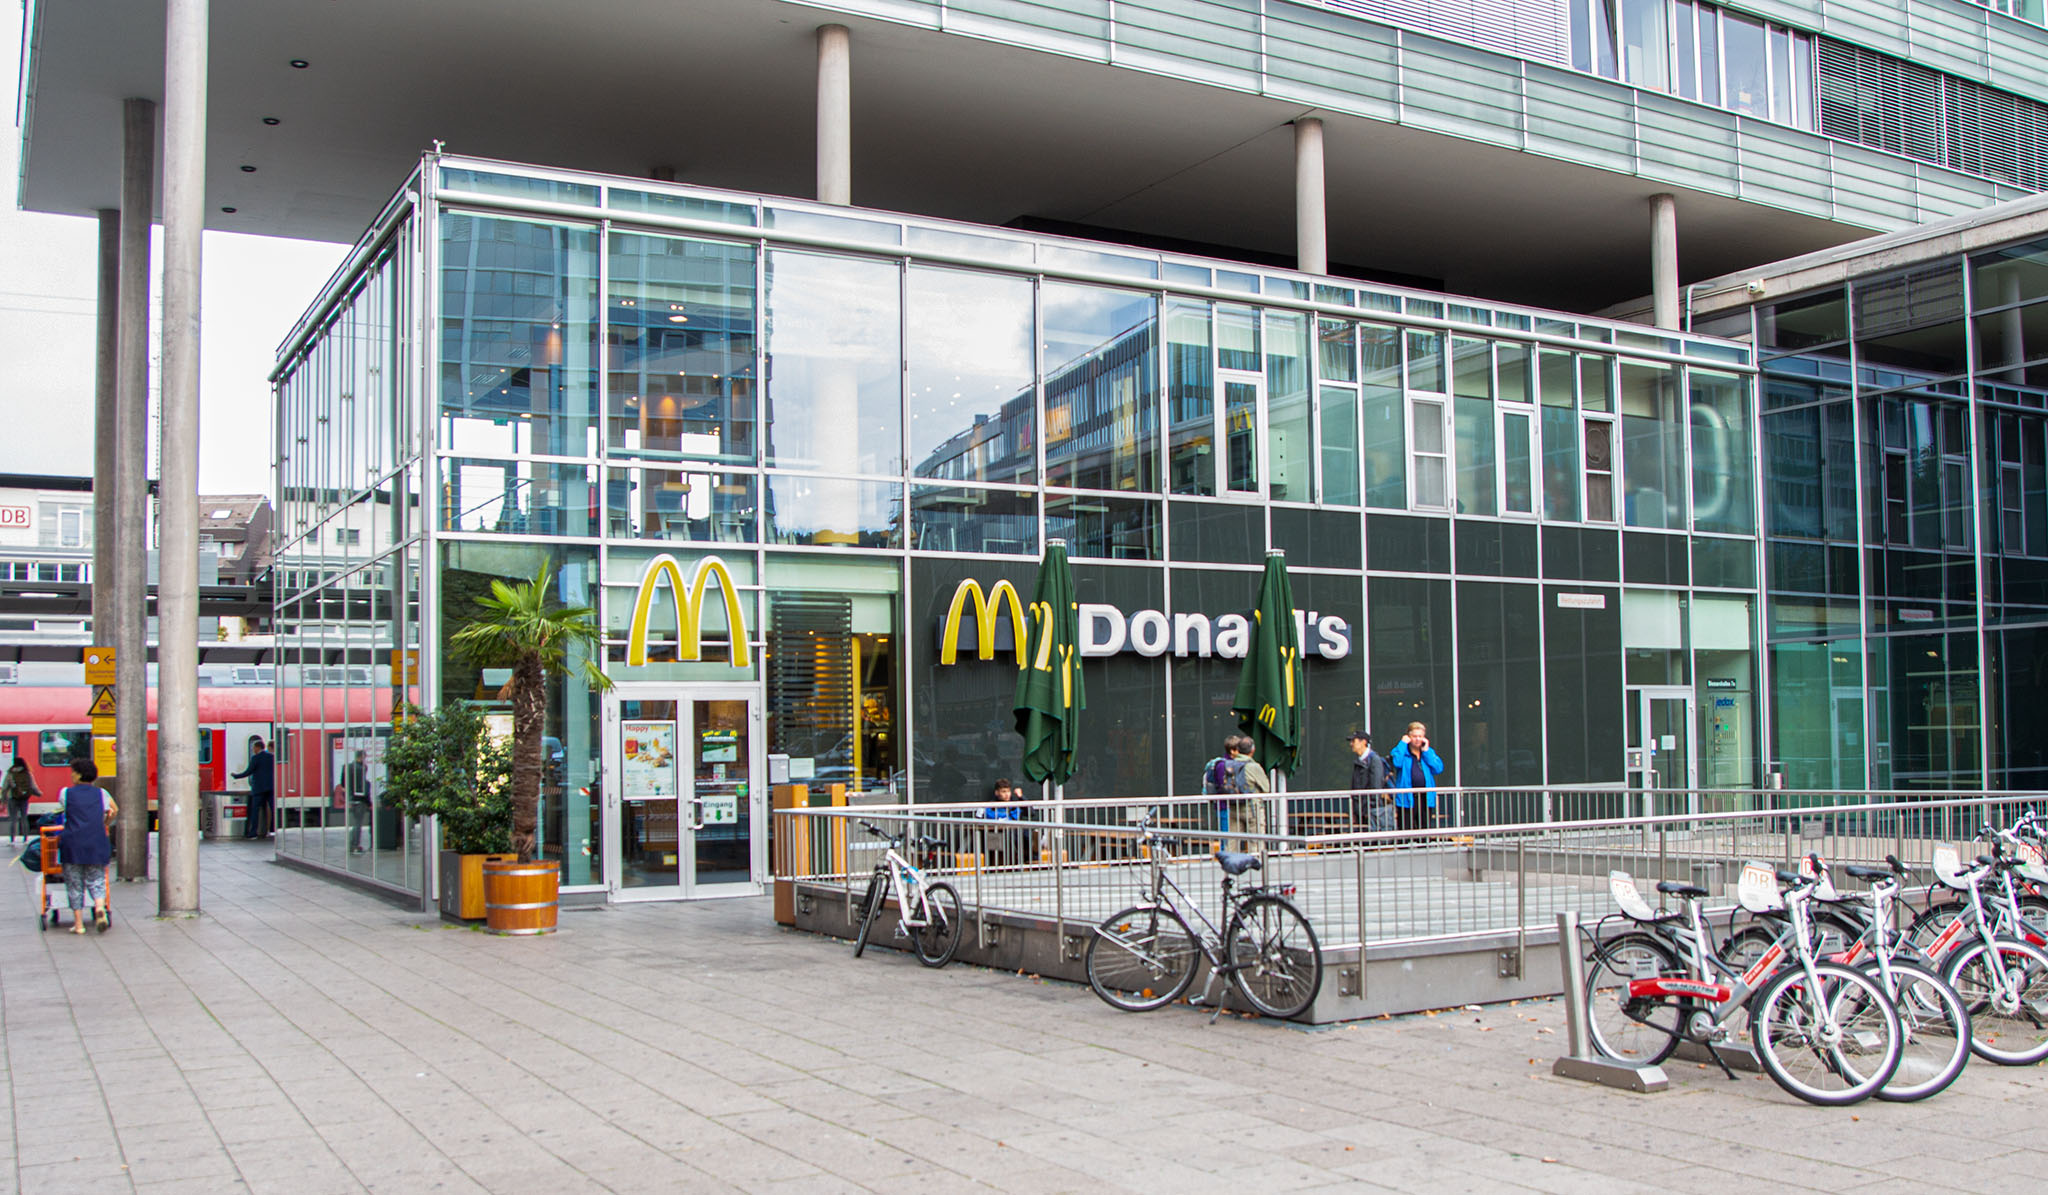 Das McDonald’s-Restaurant in Freiburg im Breisgau (Hauptbahnhof)